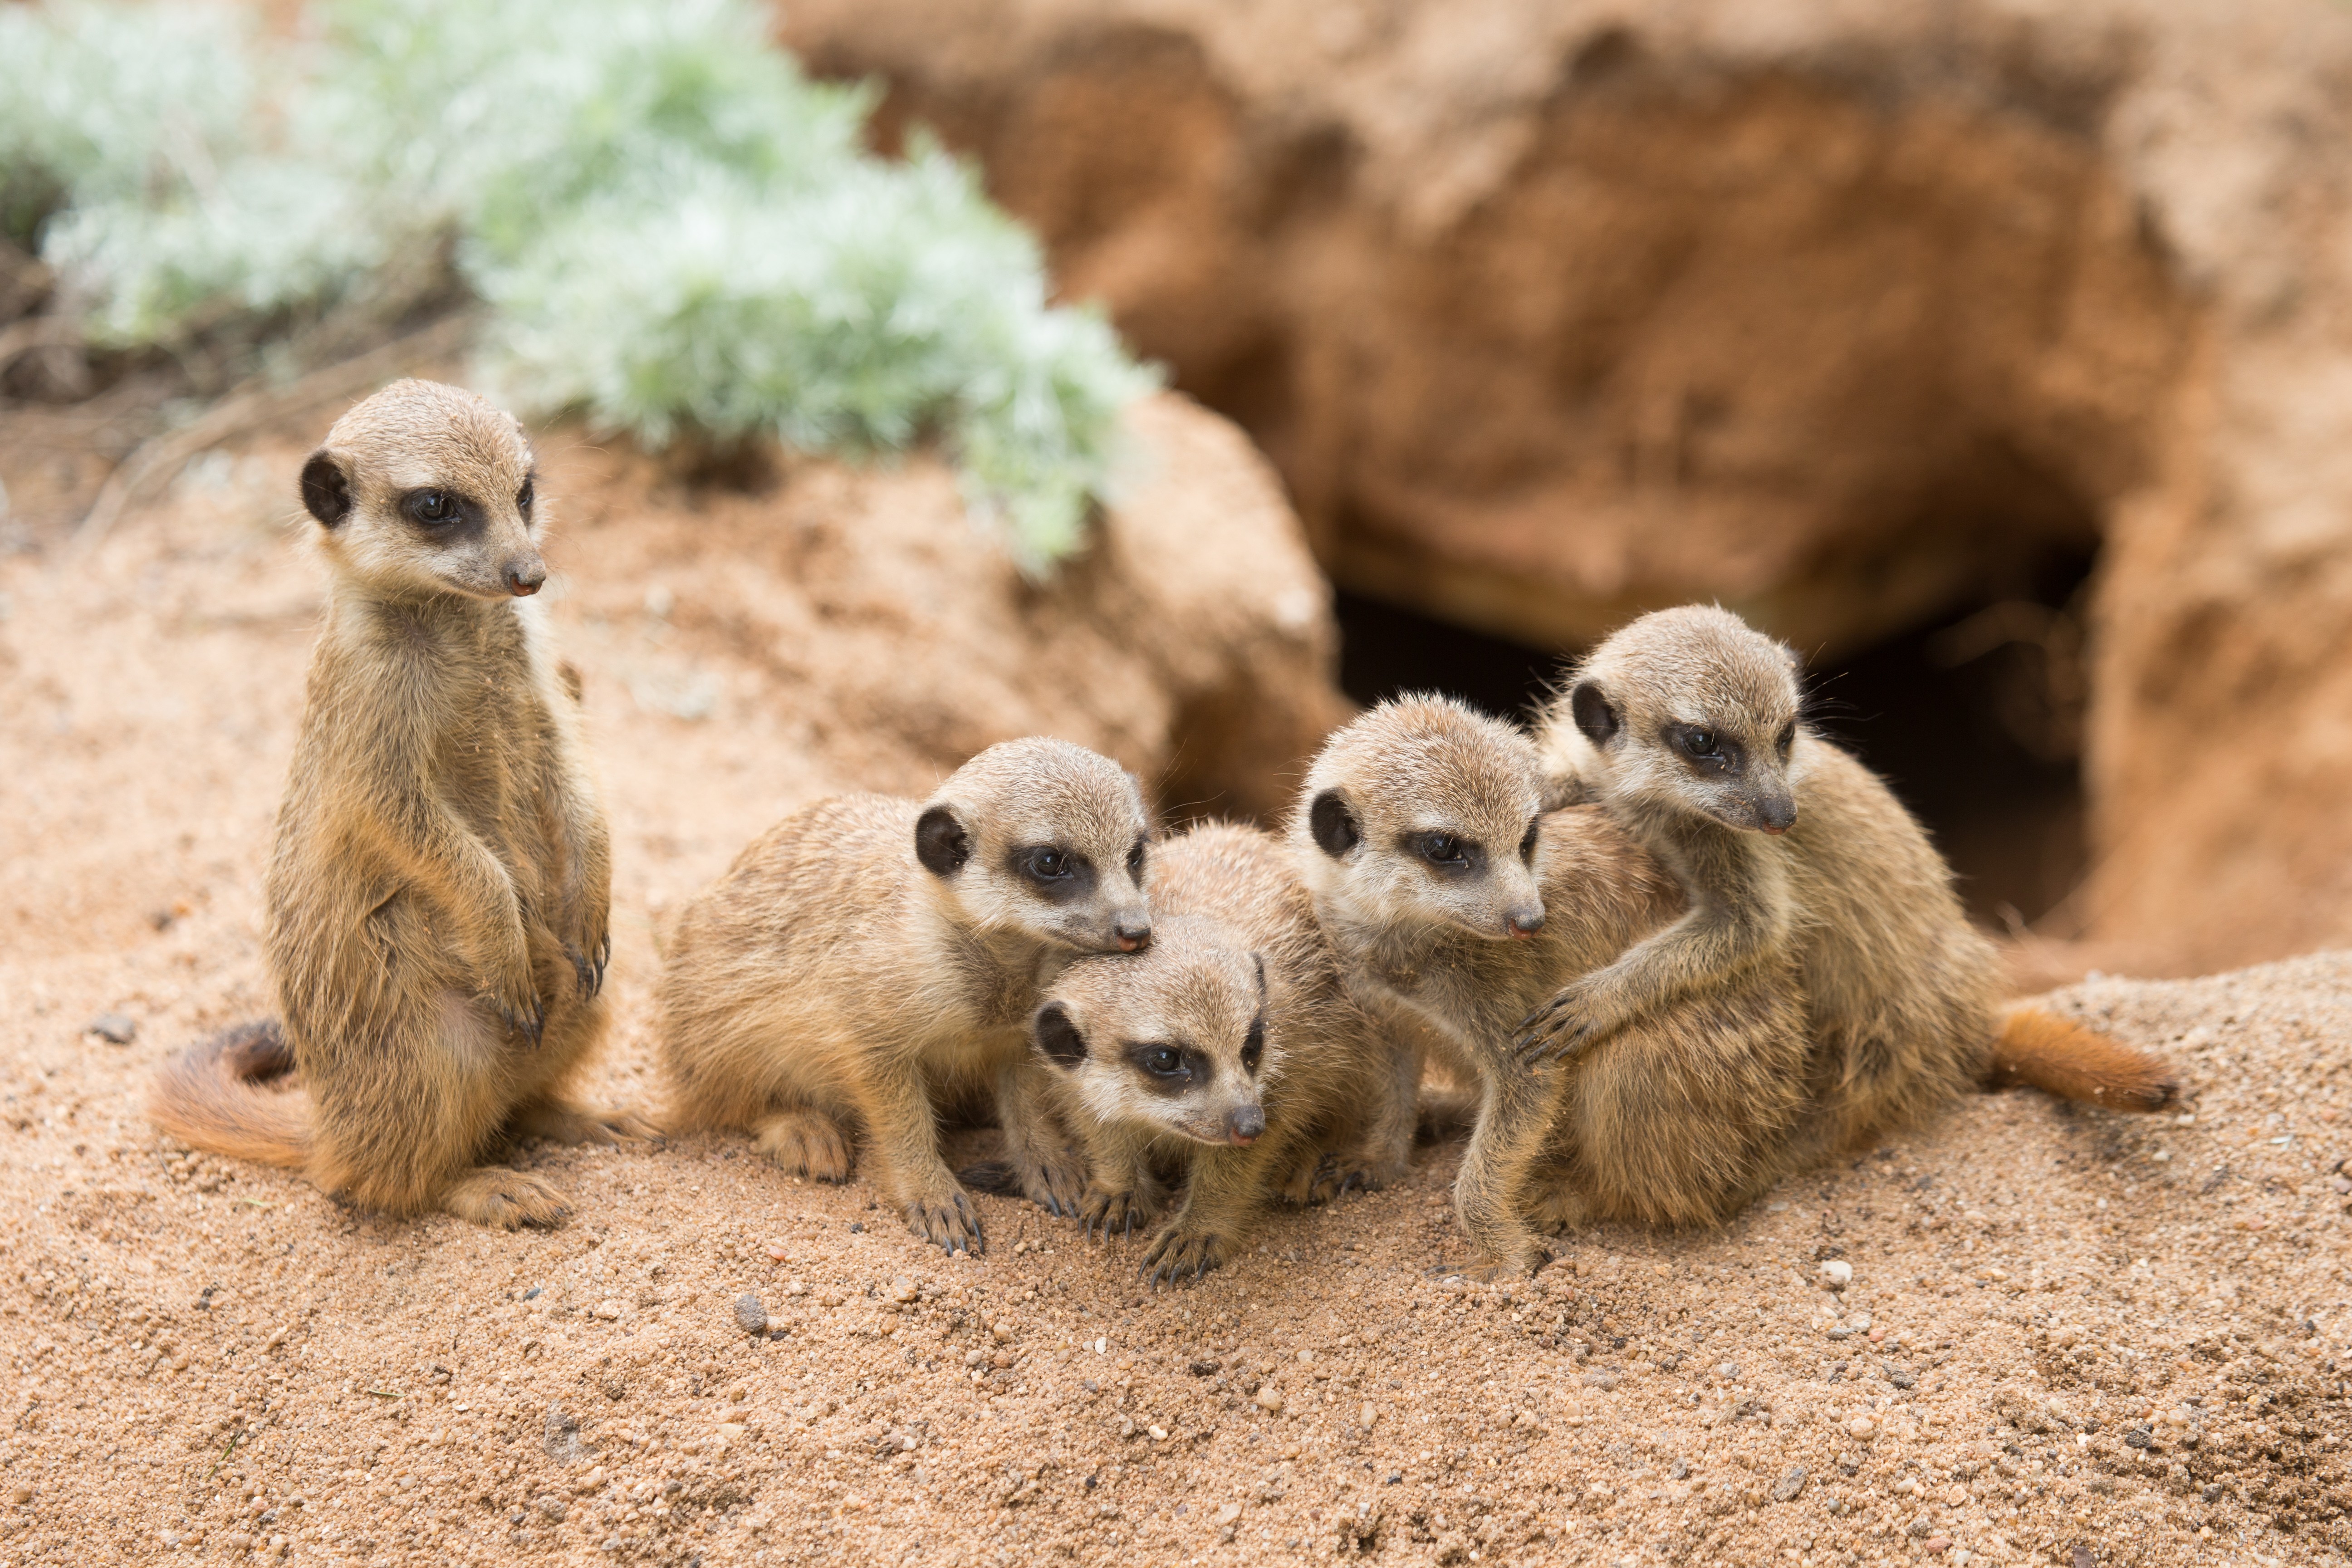 General 5184x3456 animals mammals meerkats dirt wildlife